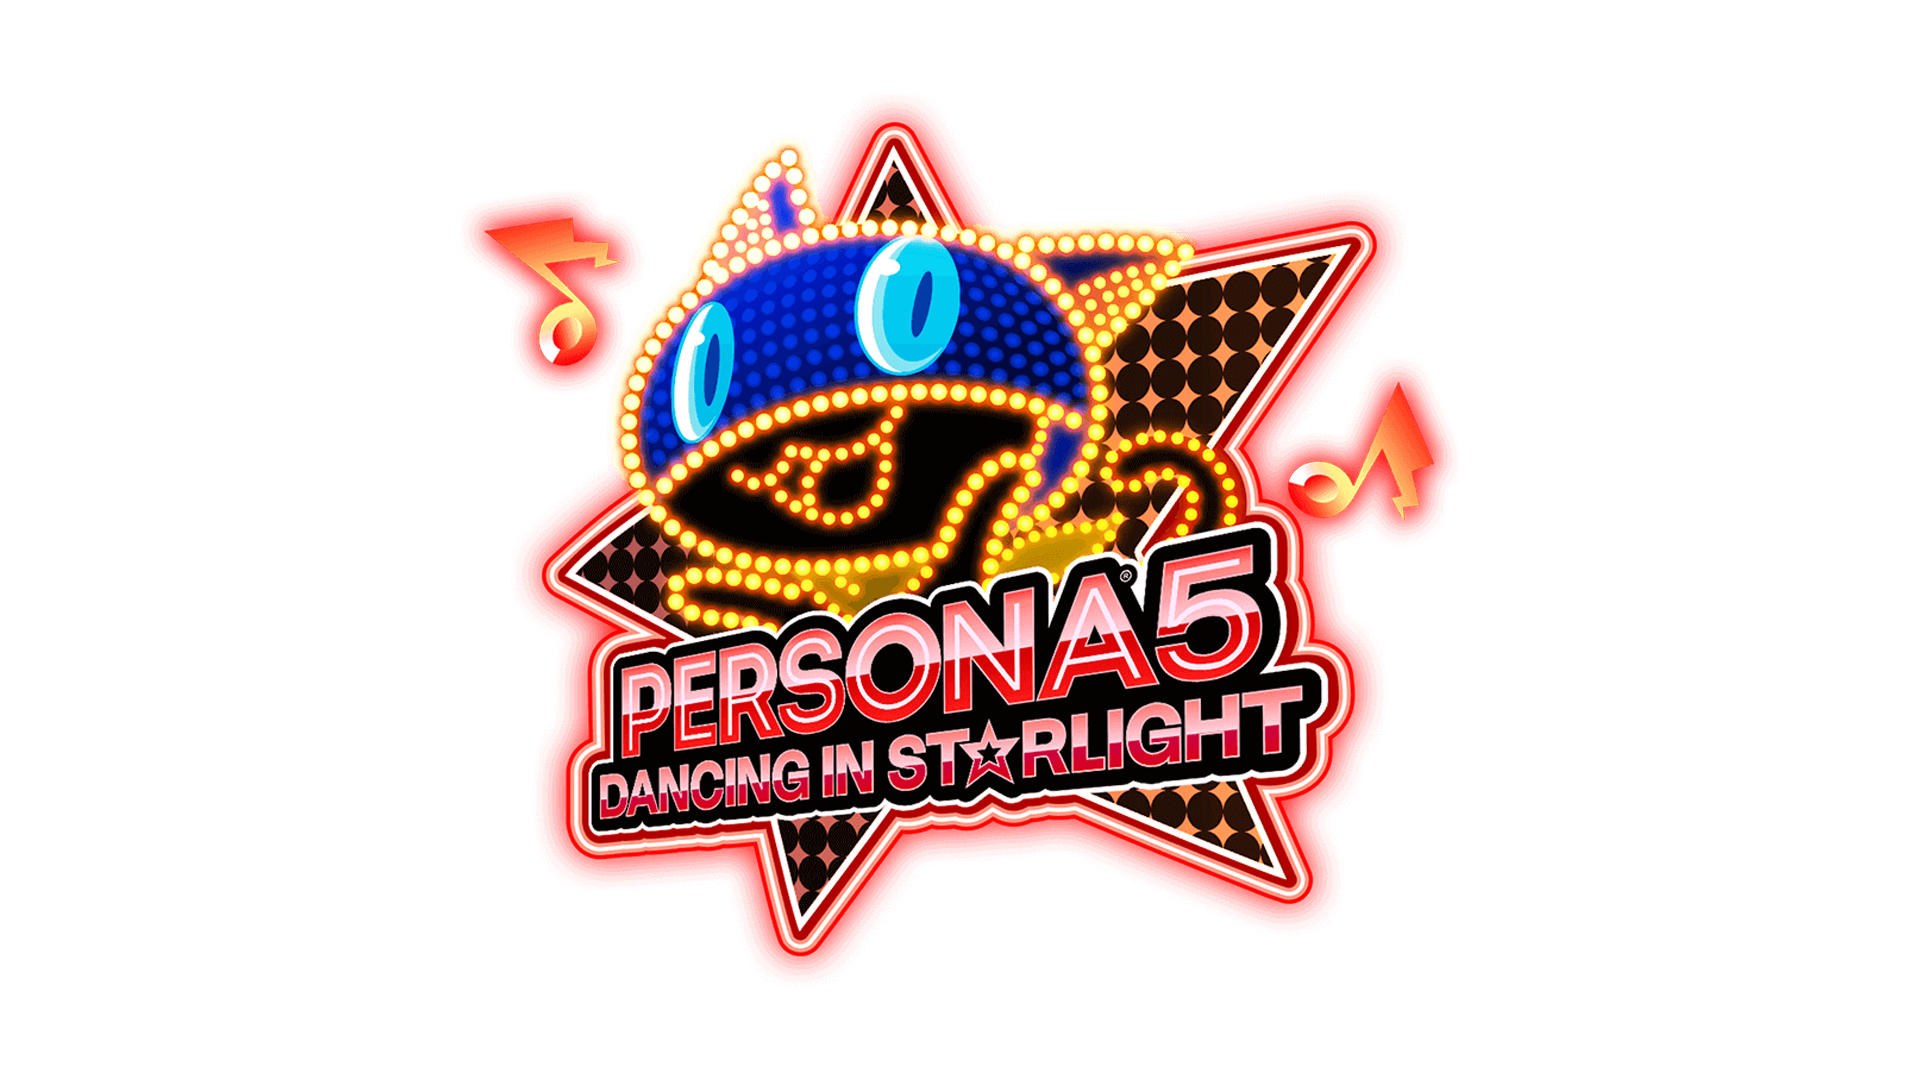 Persona 5: Dancing in Starlight Logo